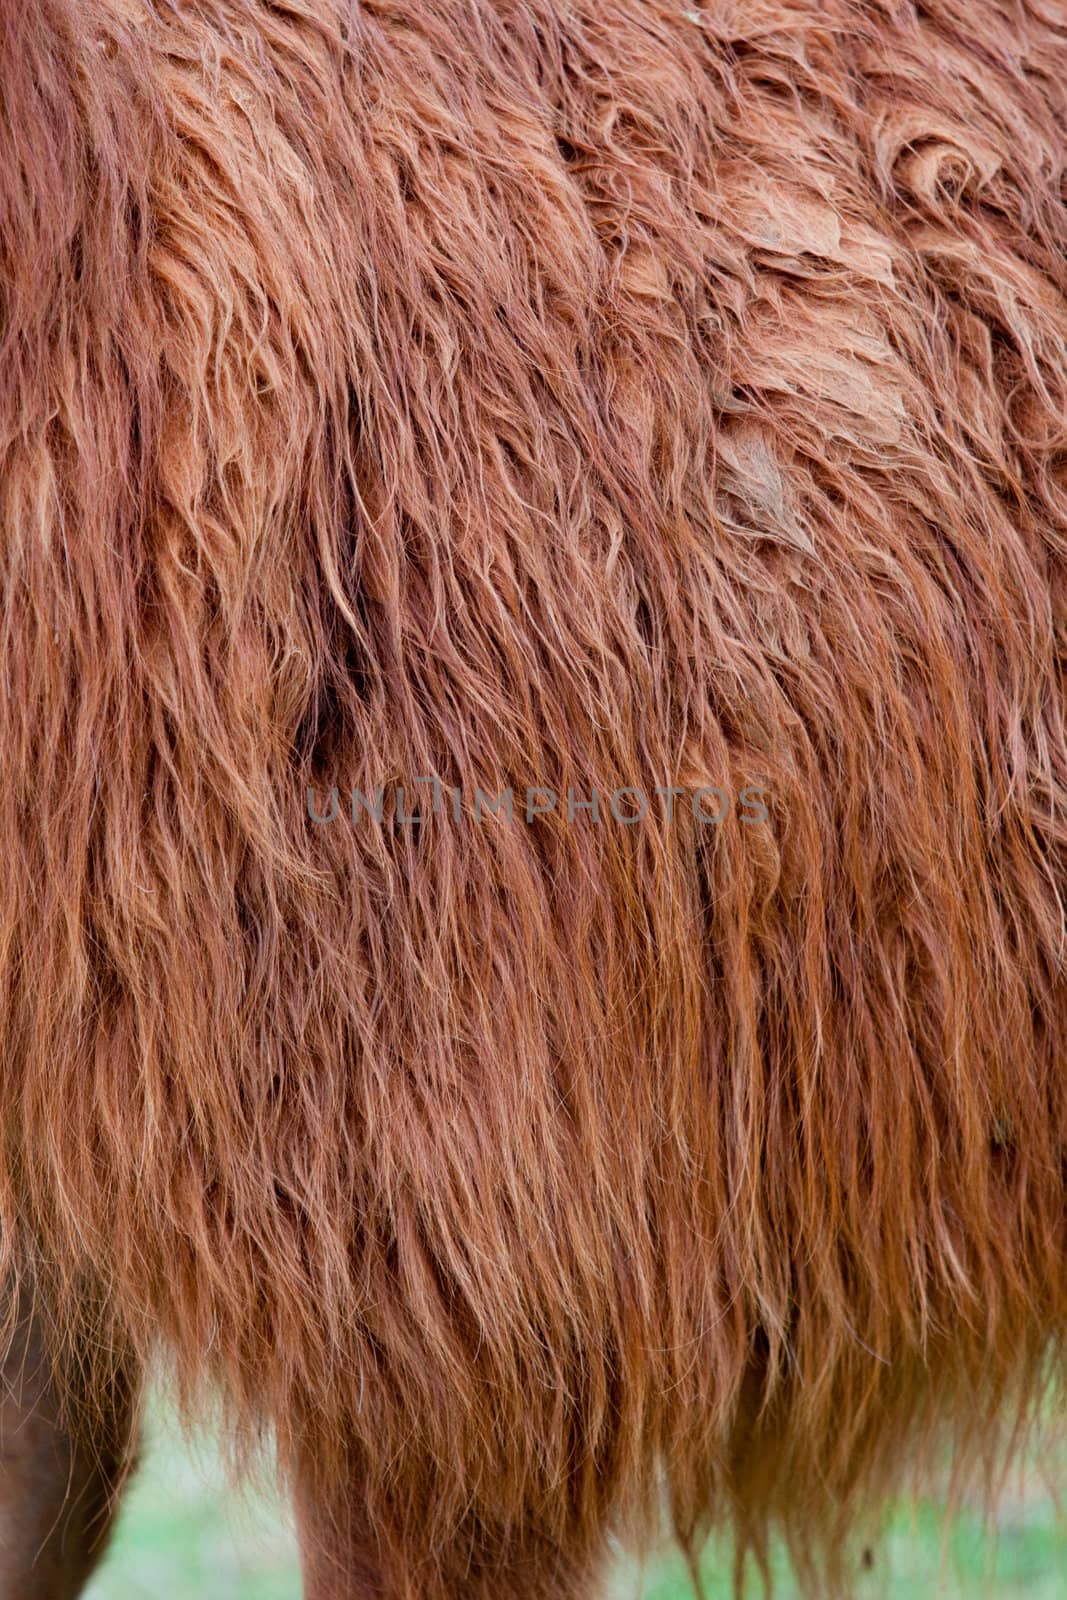 Llama Hair by joshuaraineyphotography